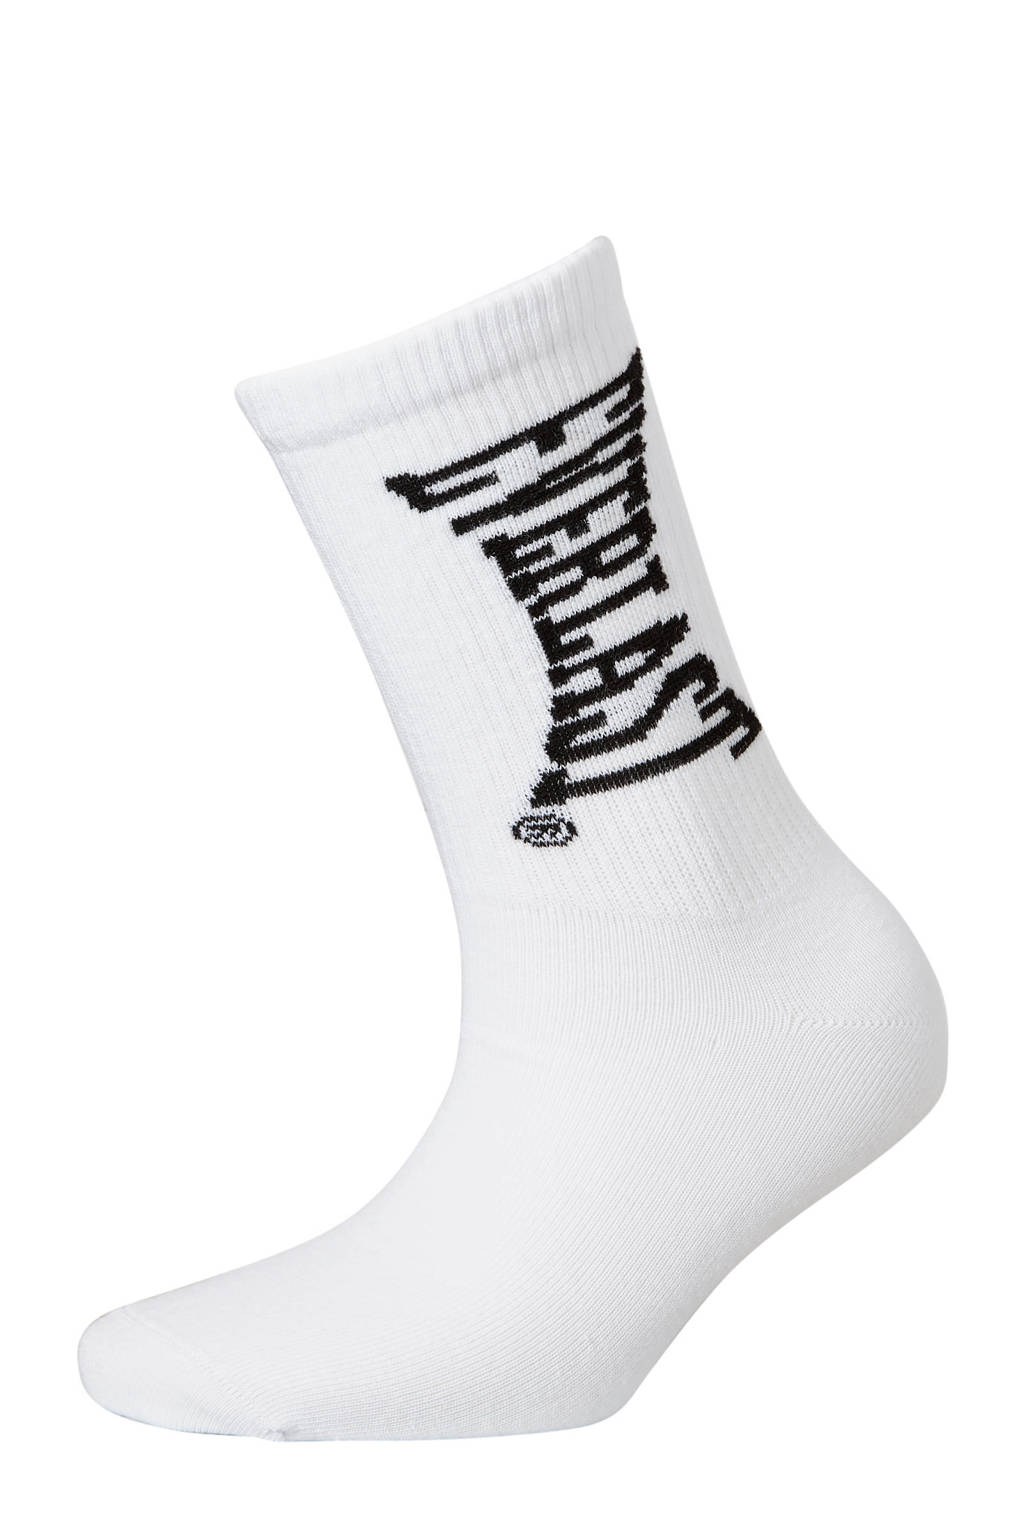 ONLY sokken ONLEVERLAST - set van 3 wit, Wit